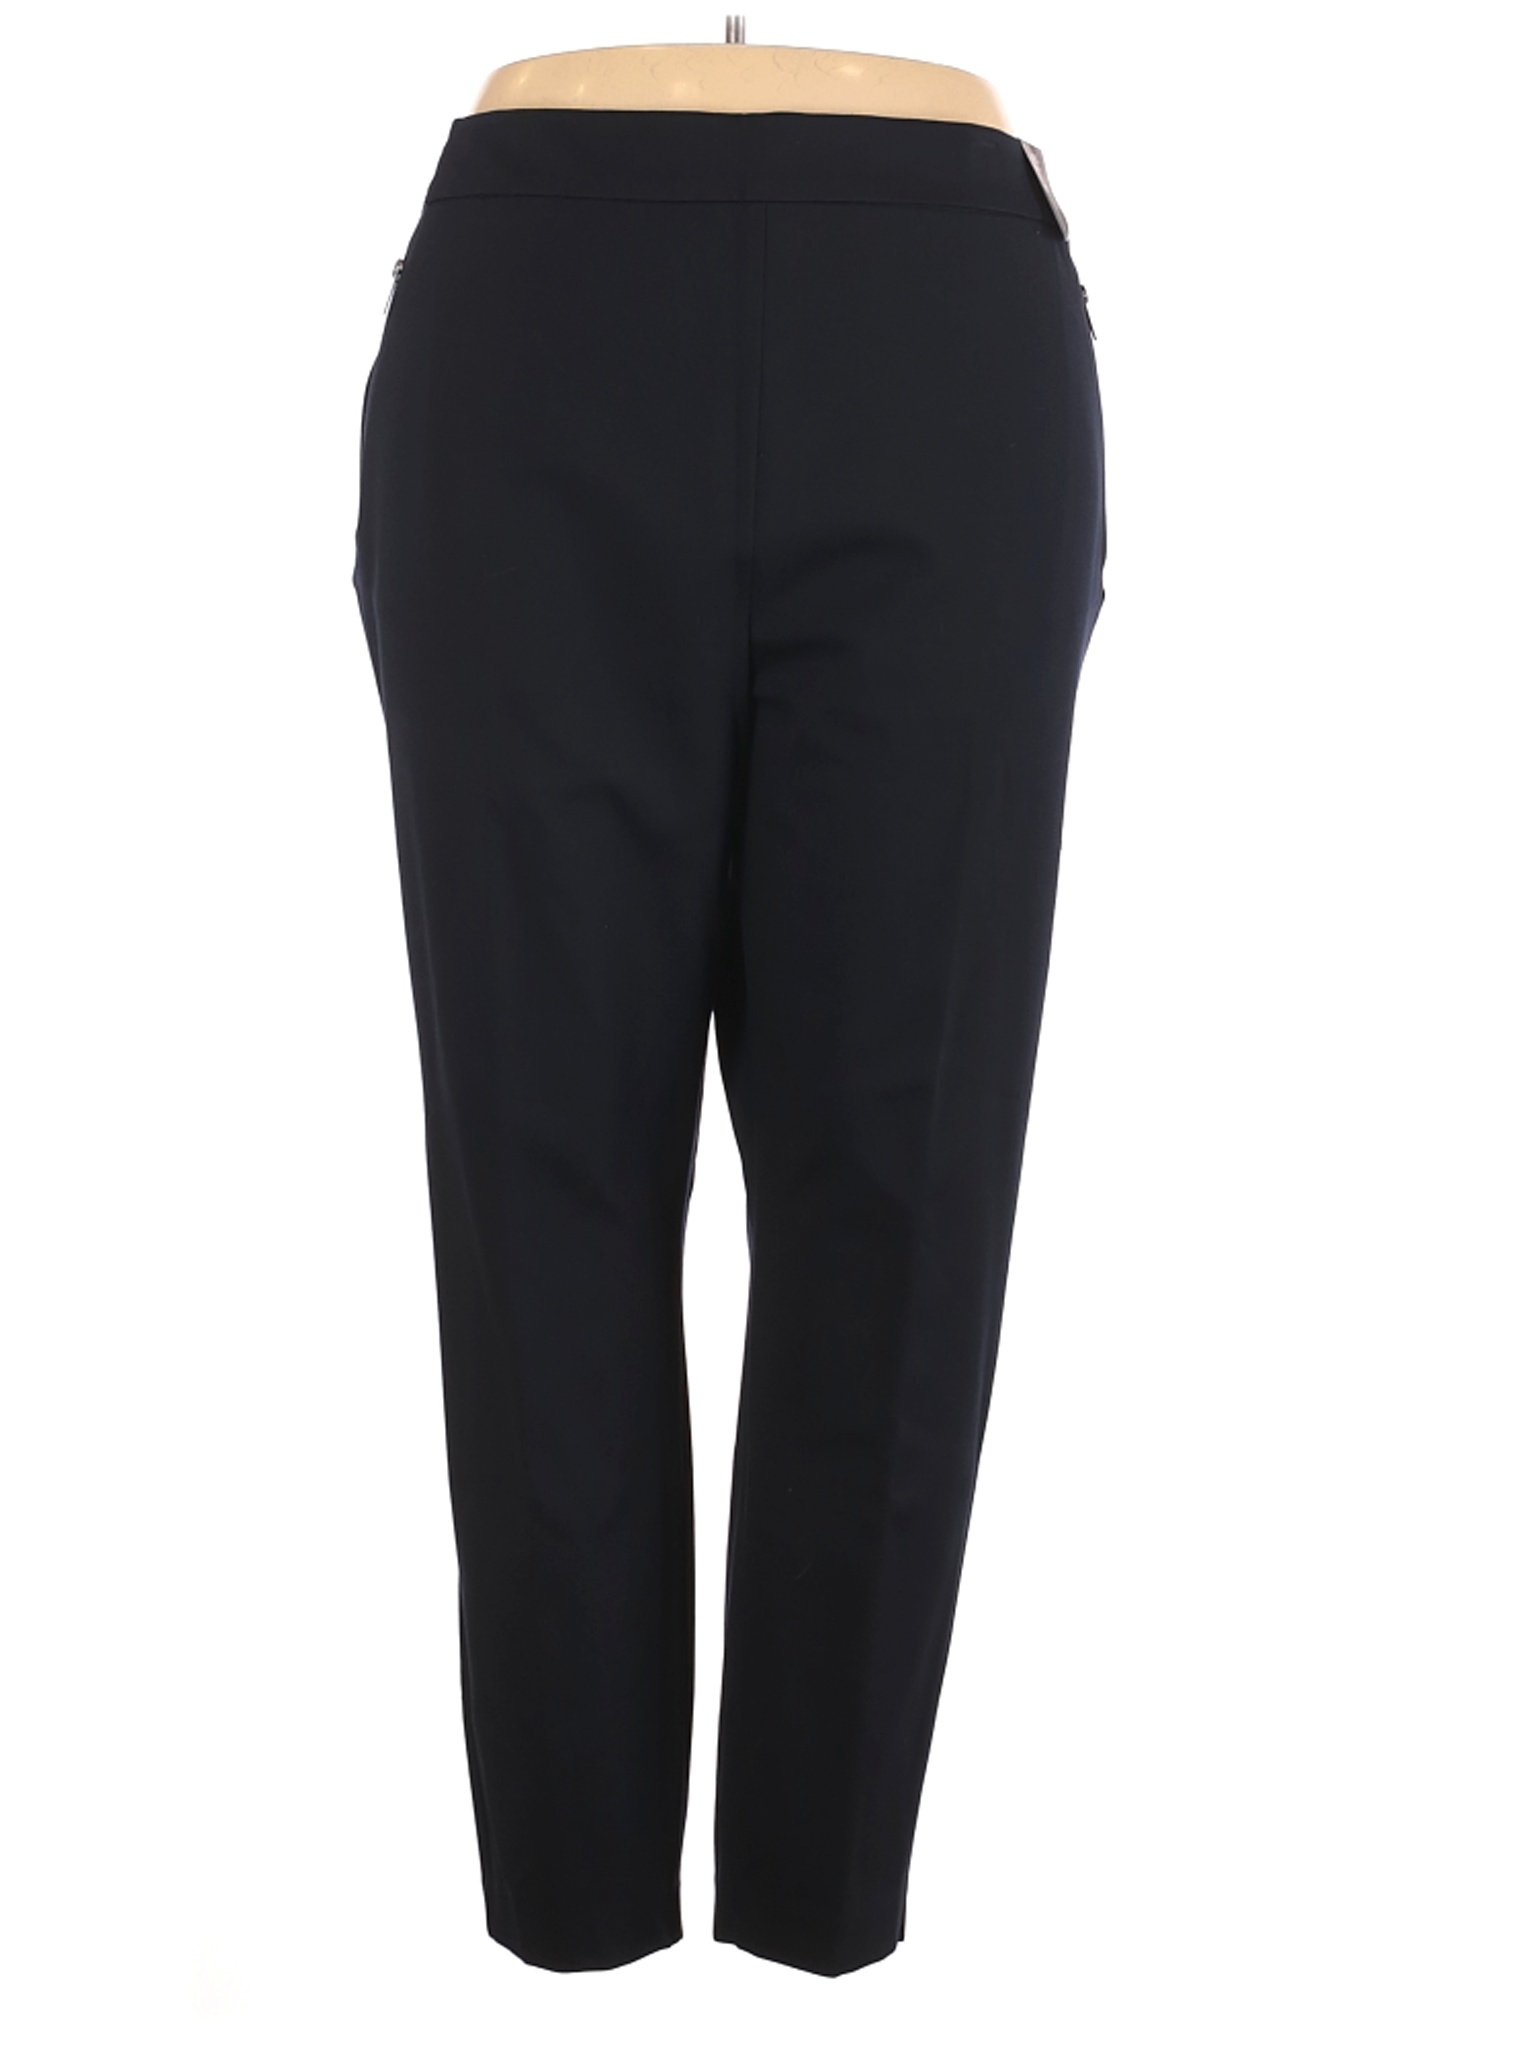 NWT M&S Collection Women Black Dress Pants 30 Plus | eBay